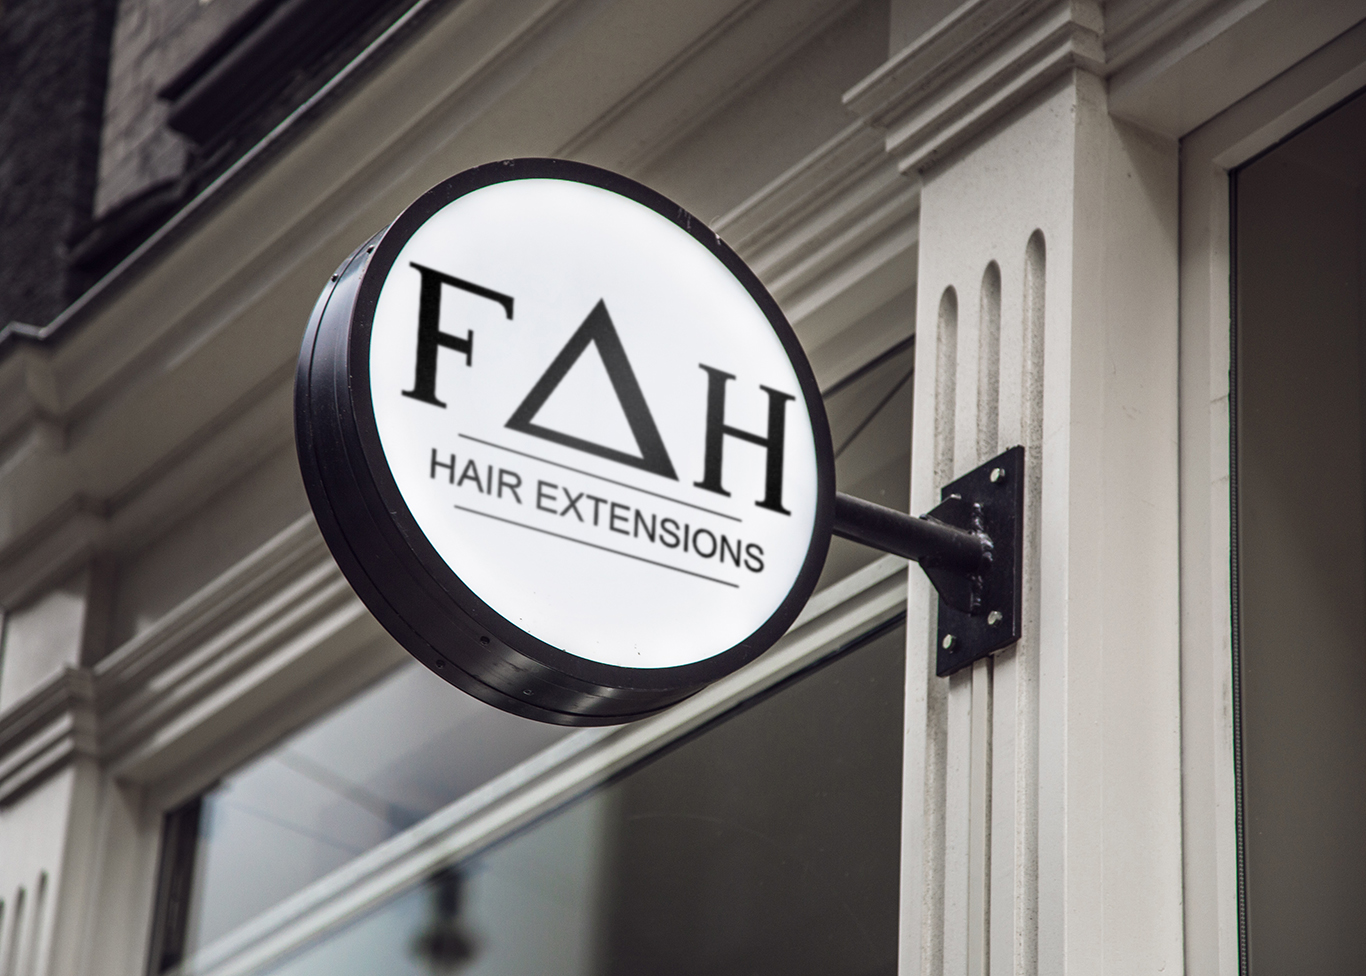 Logo Design for Hair Extension Company FAH Hair Extensions, A Richmond Hill based Hair Extension Company